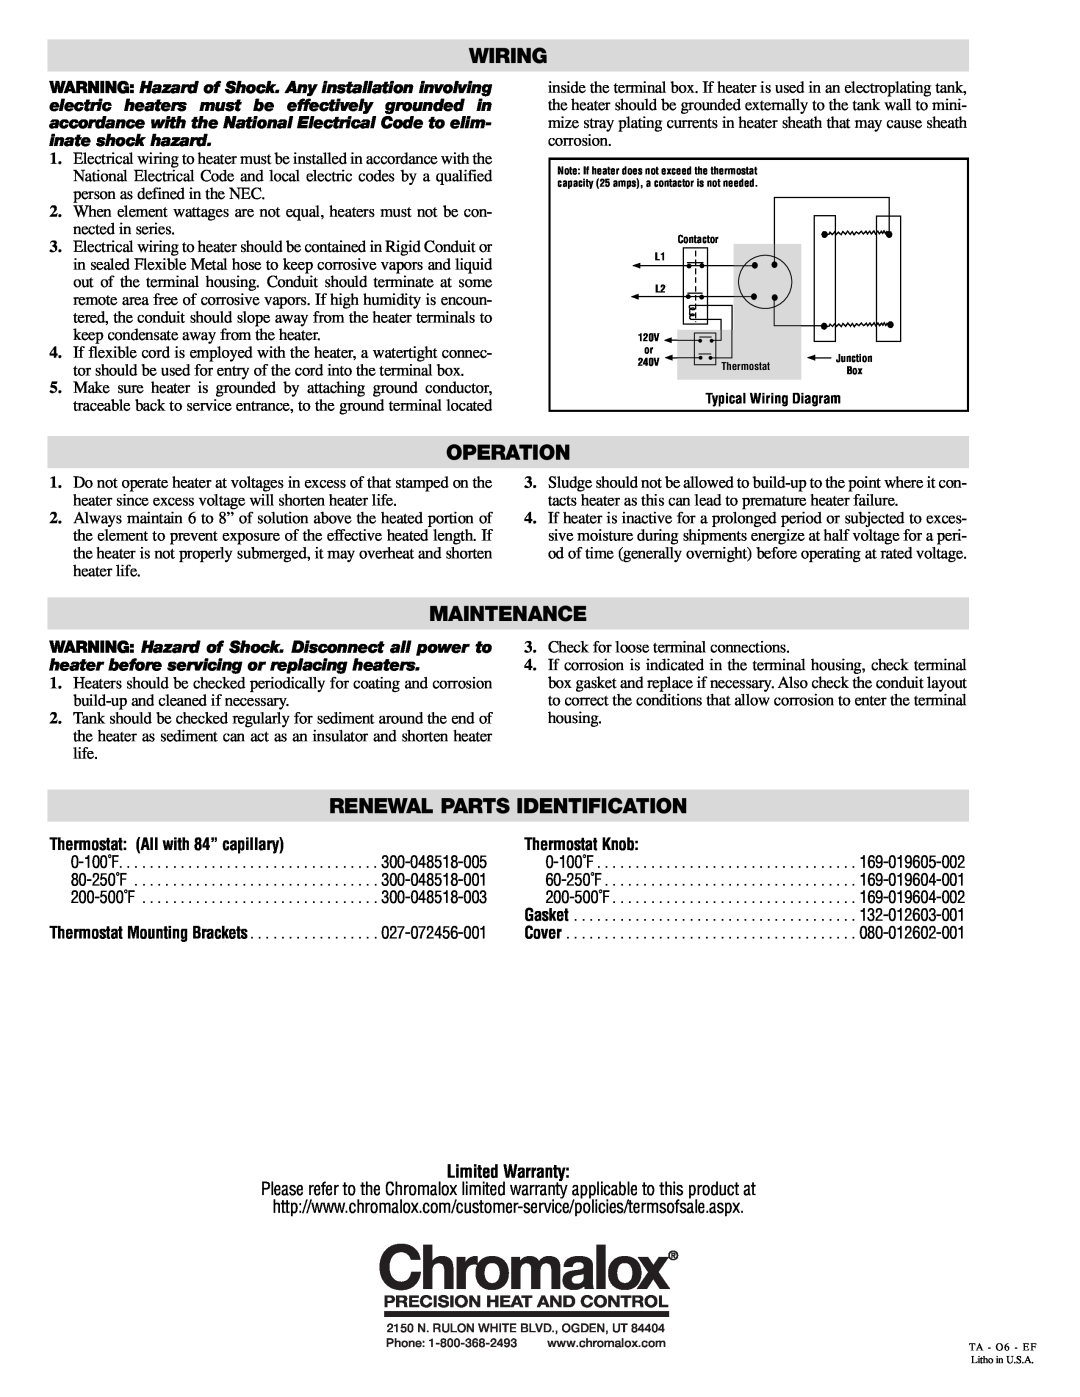 Chromalox KBLC installation instructions Wiring, Operation, Maintenance, Renewal Parts Identification, Limited Warranty 